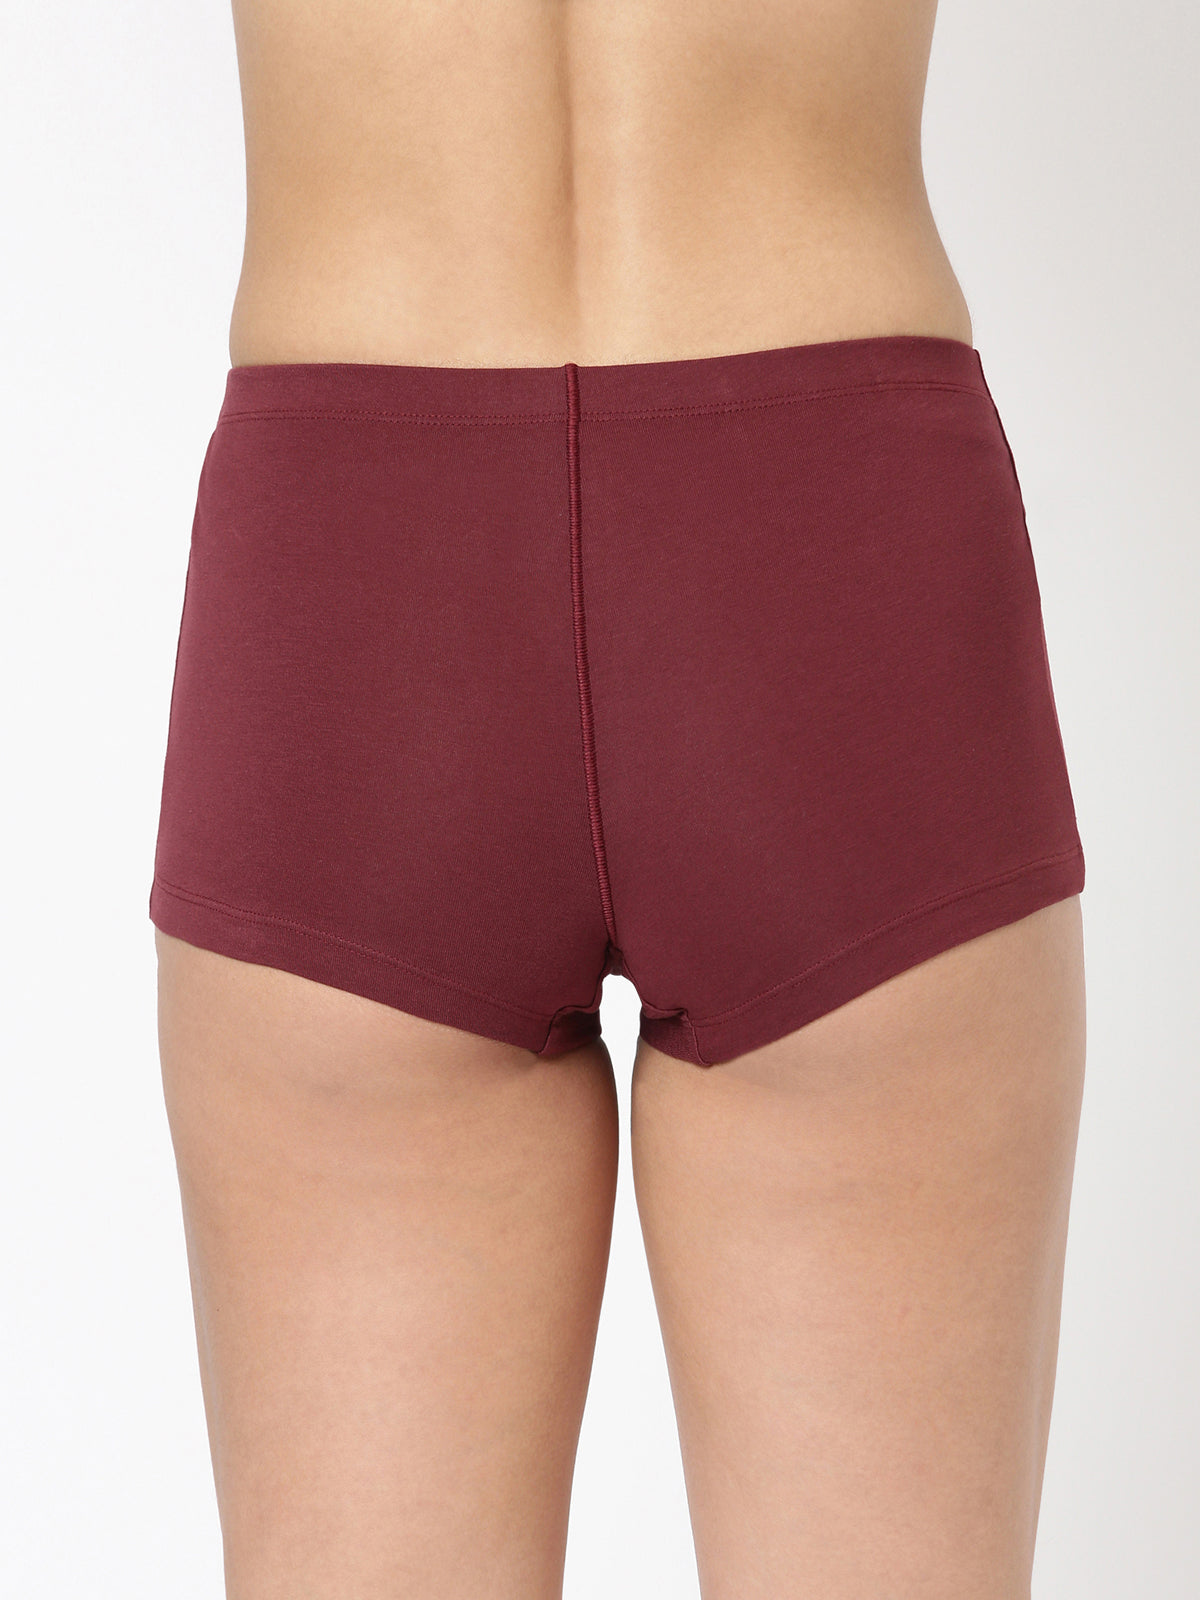 Slanted Shorts Panties _Pack of 2